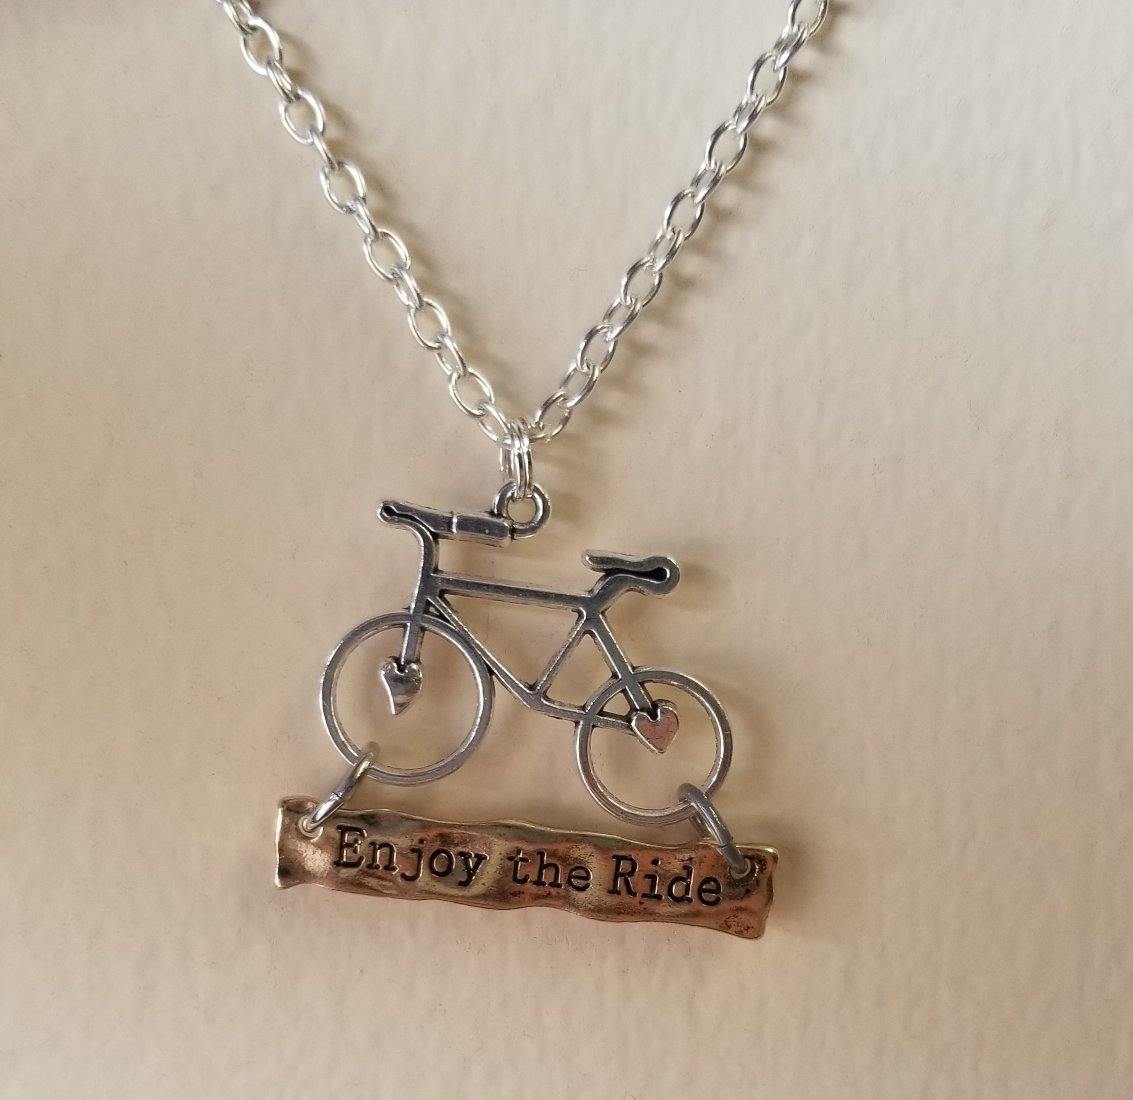 Enjoy The Ride Bicycle Pendant Necklace - DearBritt